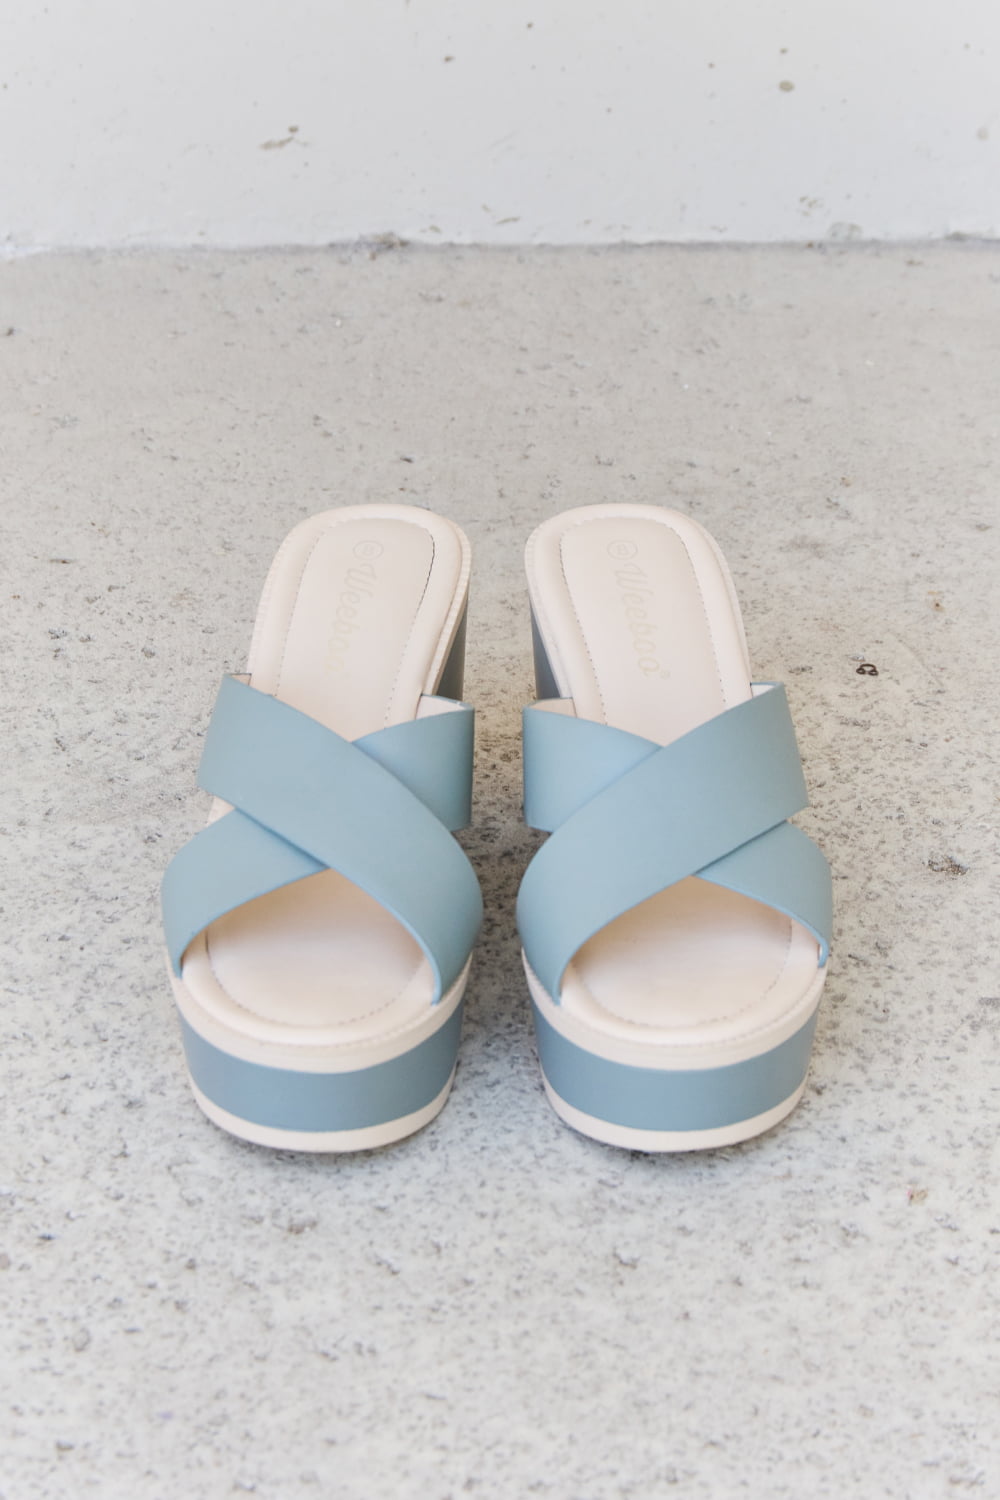 Contrast Platform Sandals in Misty BlueSandalsWeeboo